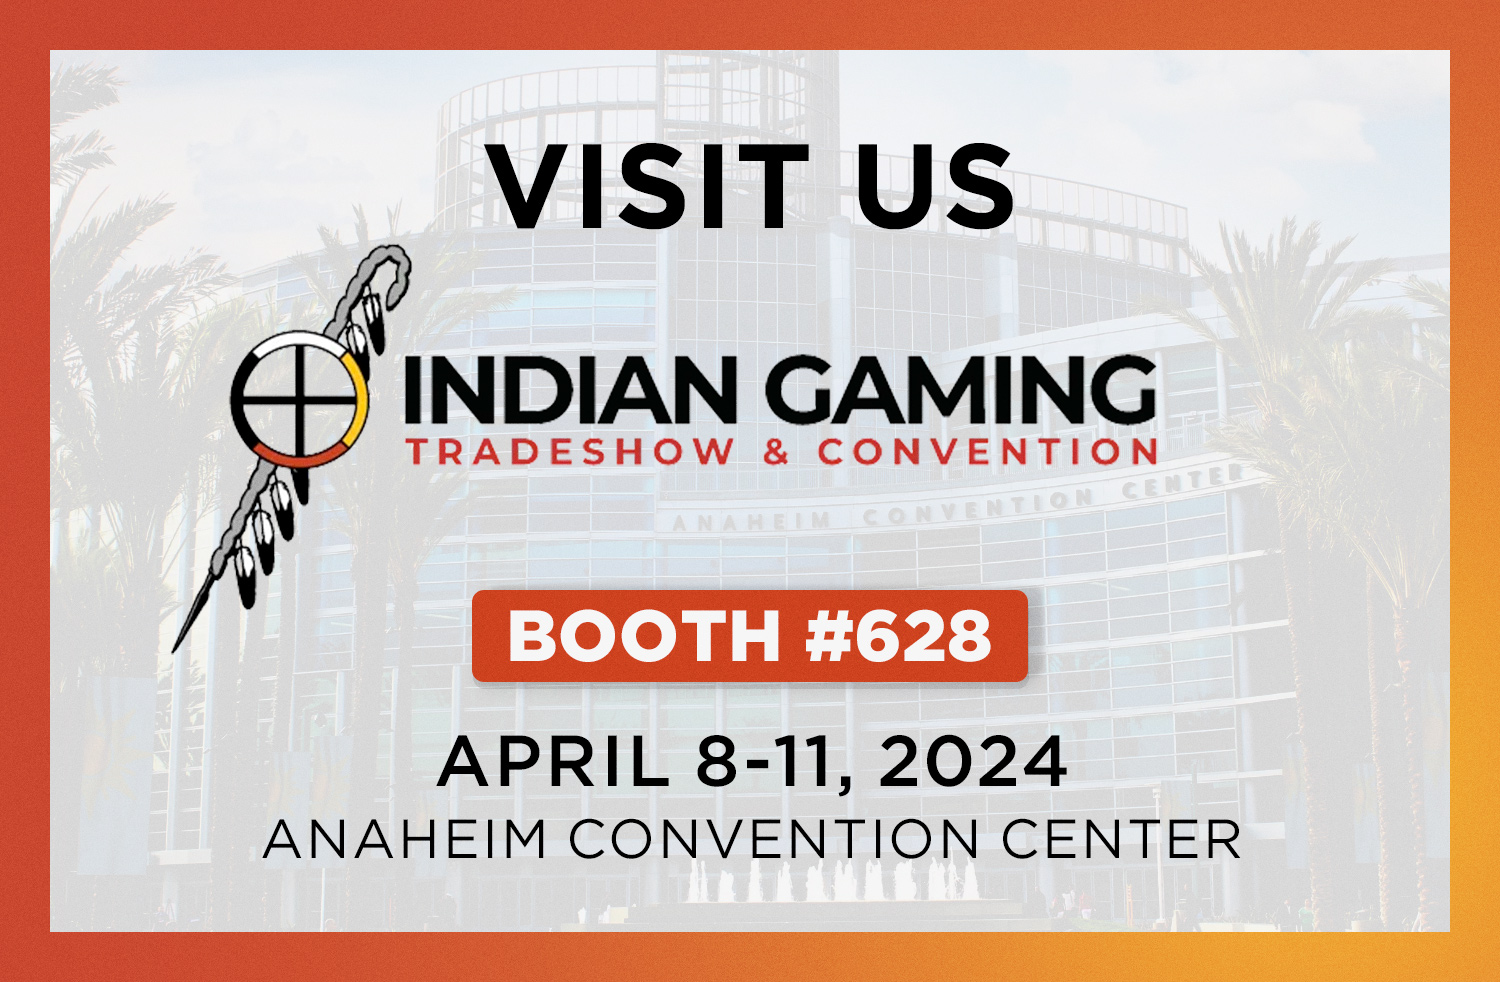 Indian Gaming Tradeshow (IGA)